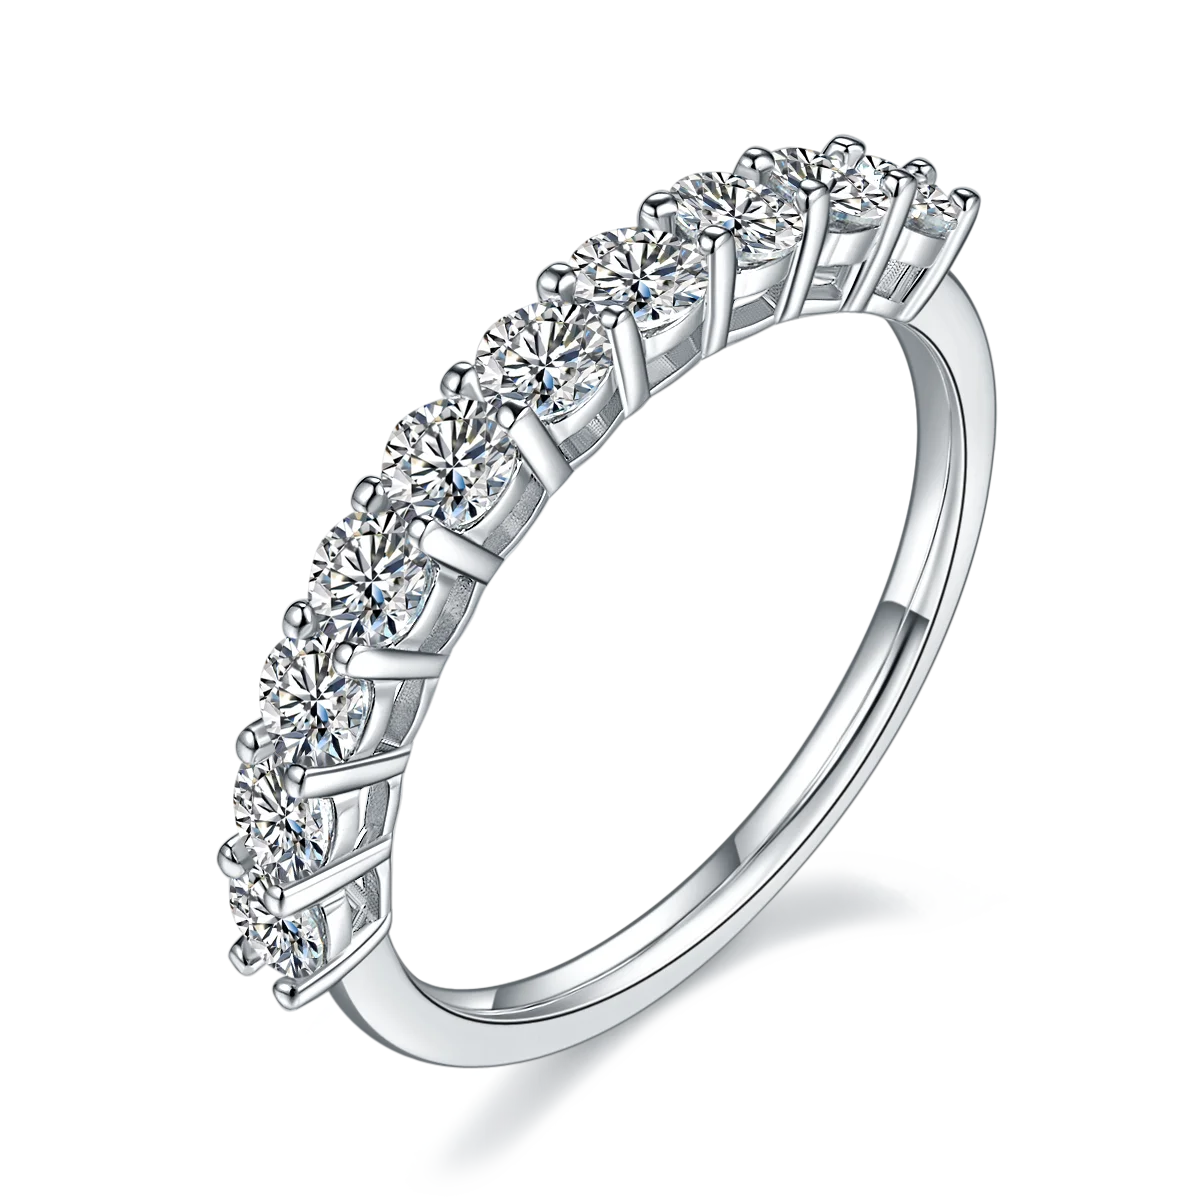 GEM'S BALLET 18K White Gold Plated 925 Sterling Silver Moissanite Ring Luxe Anthology Moissanite Diamond Wedding Band Rings 925 Sterling Silver Round Shape